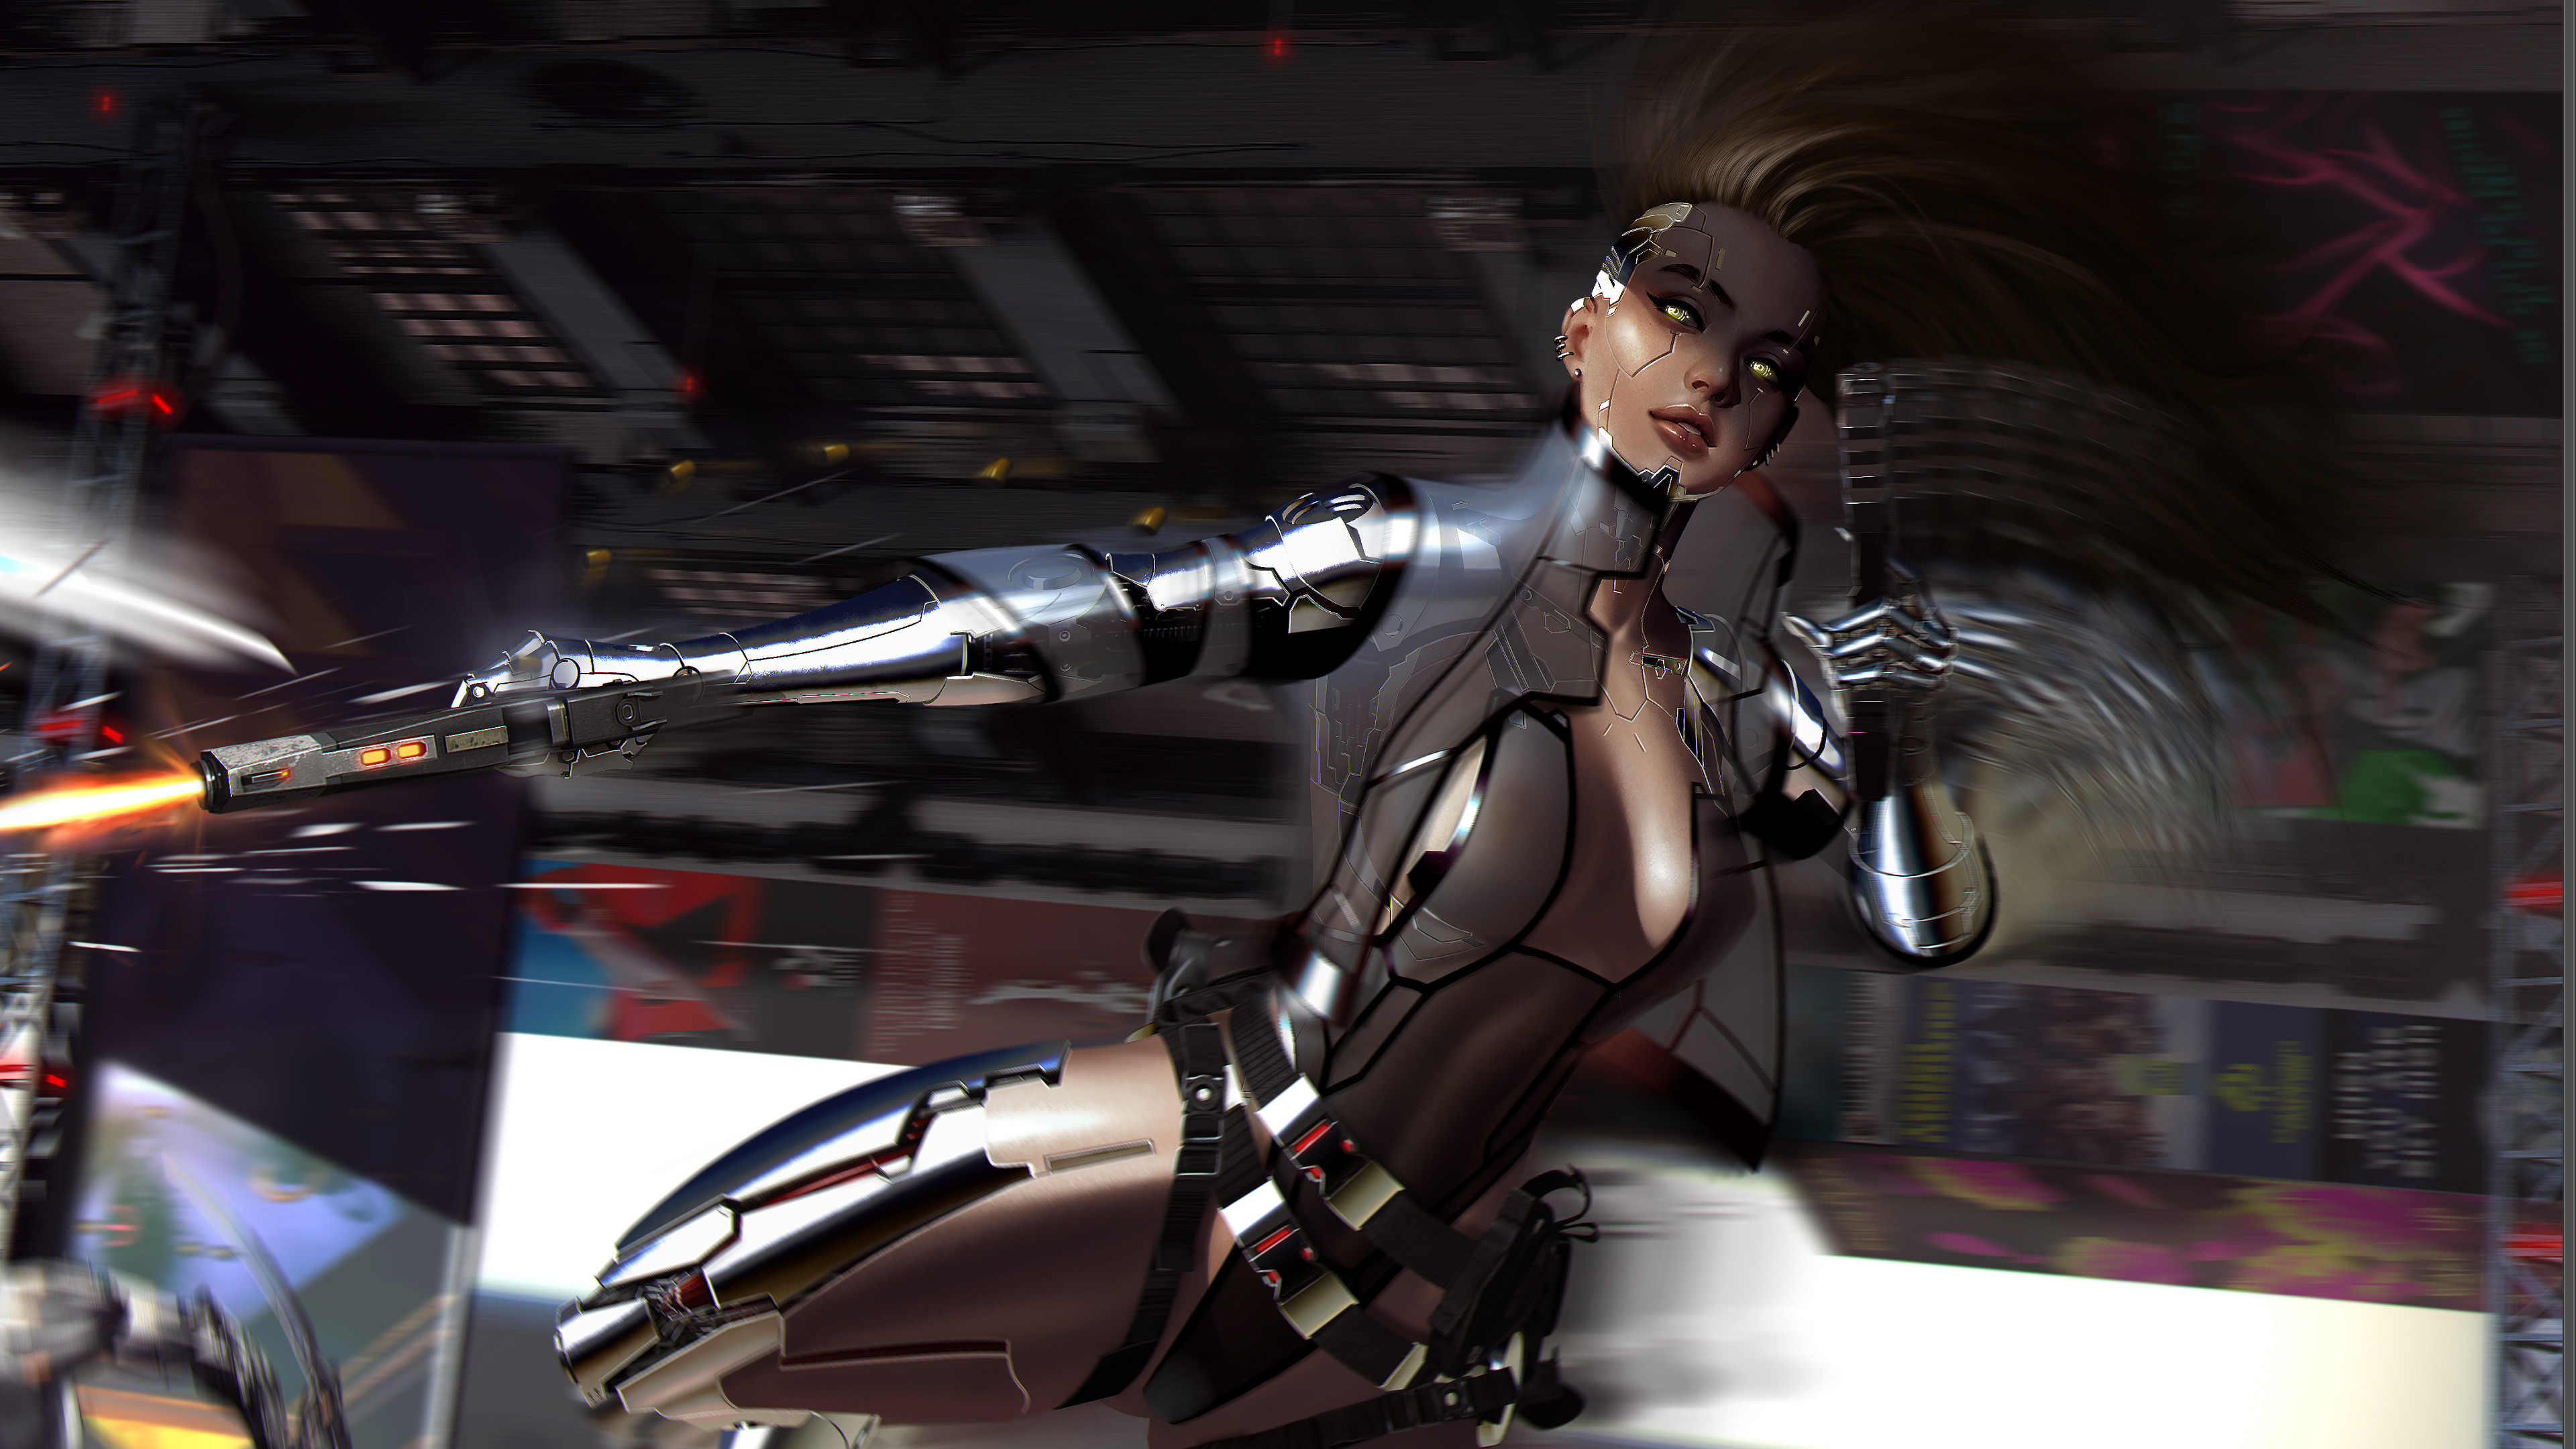 General 3840x2160 Cyberpunk 2077 cyberpunk girls with guns Fly looking at viewer CGI digital art katana